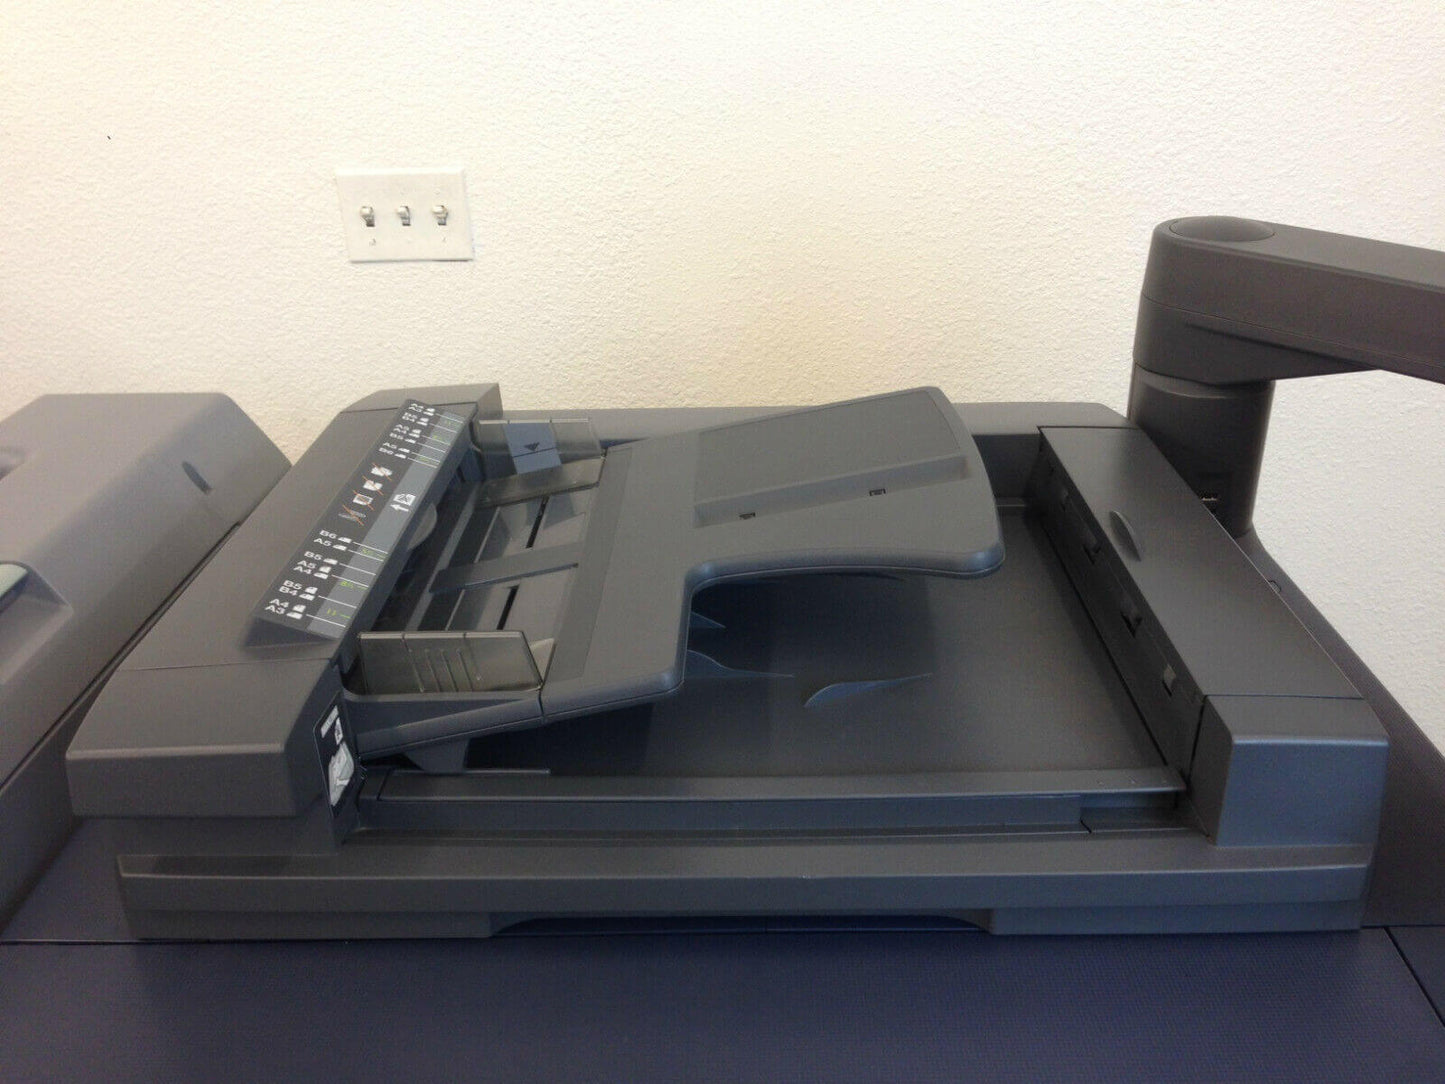 Konica Minolta Bizhub Pro C6000L Copier Printer Scanner Finisher LCT, only 122k - copier-clearance-center